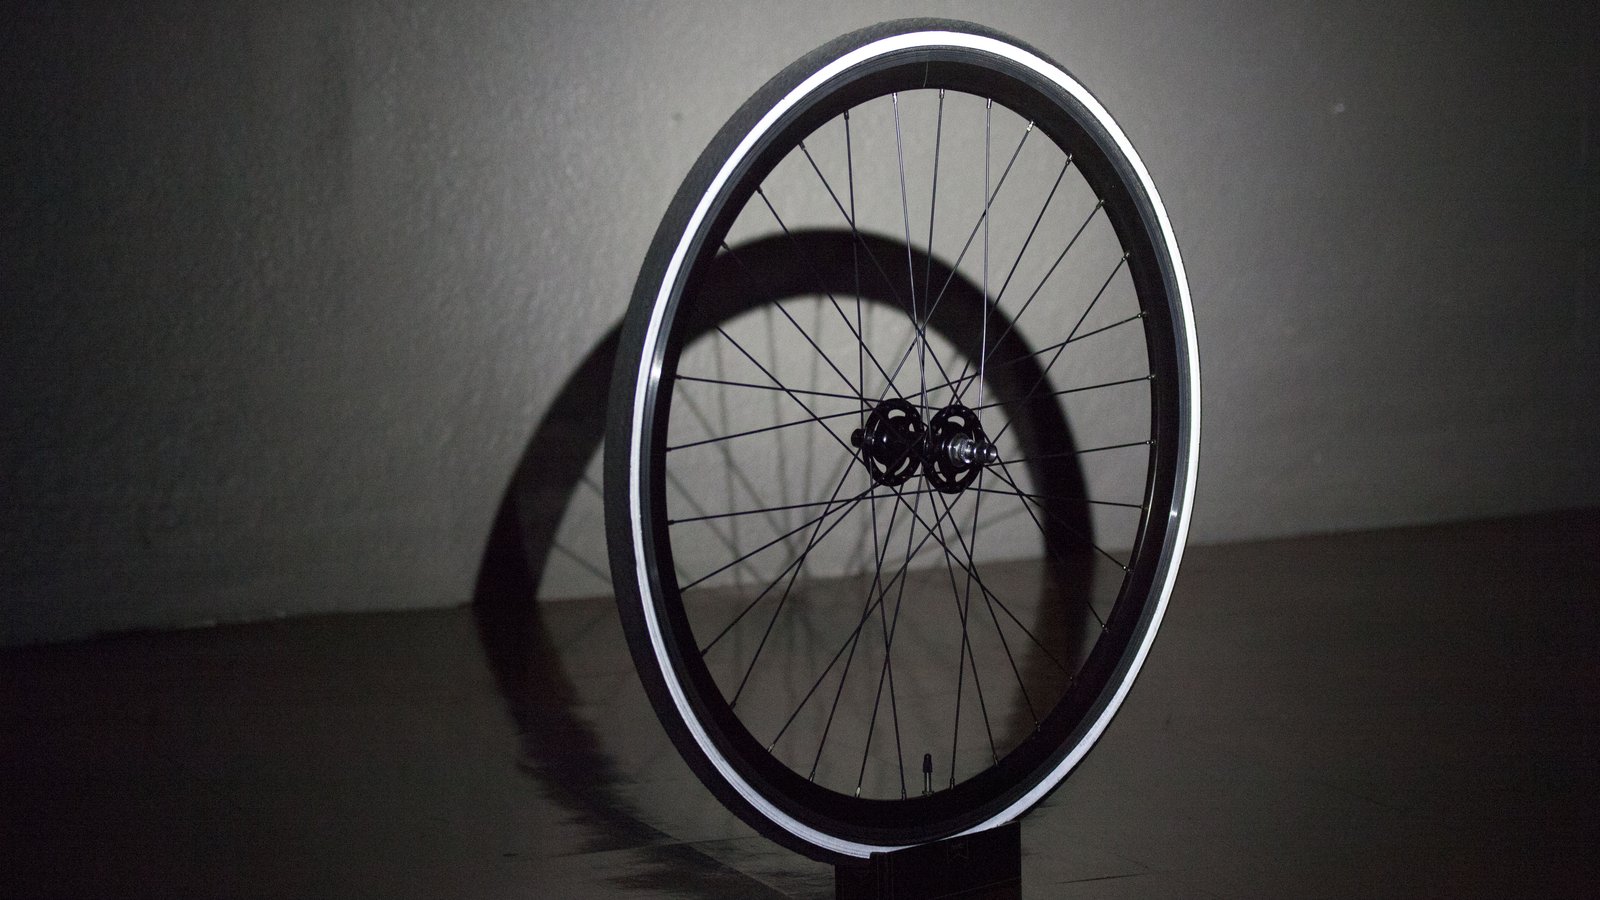 LIT - Ultra-reflective Bike Tire